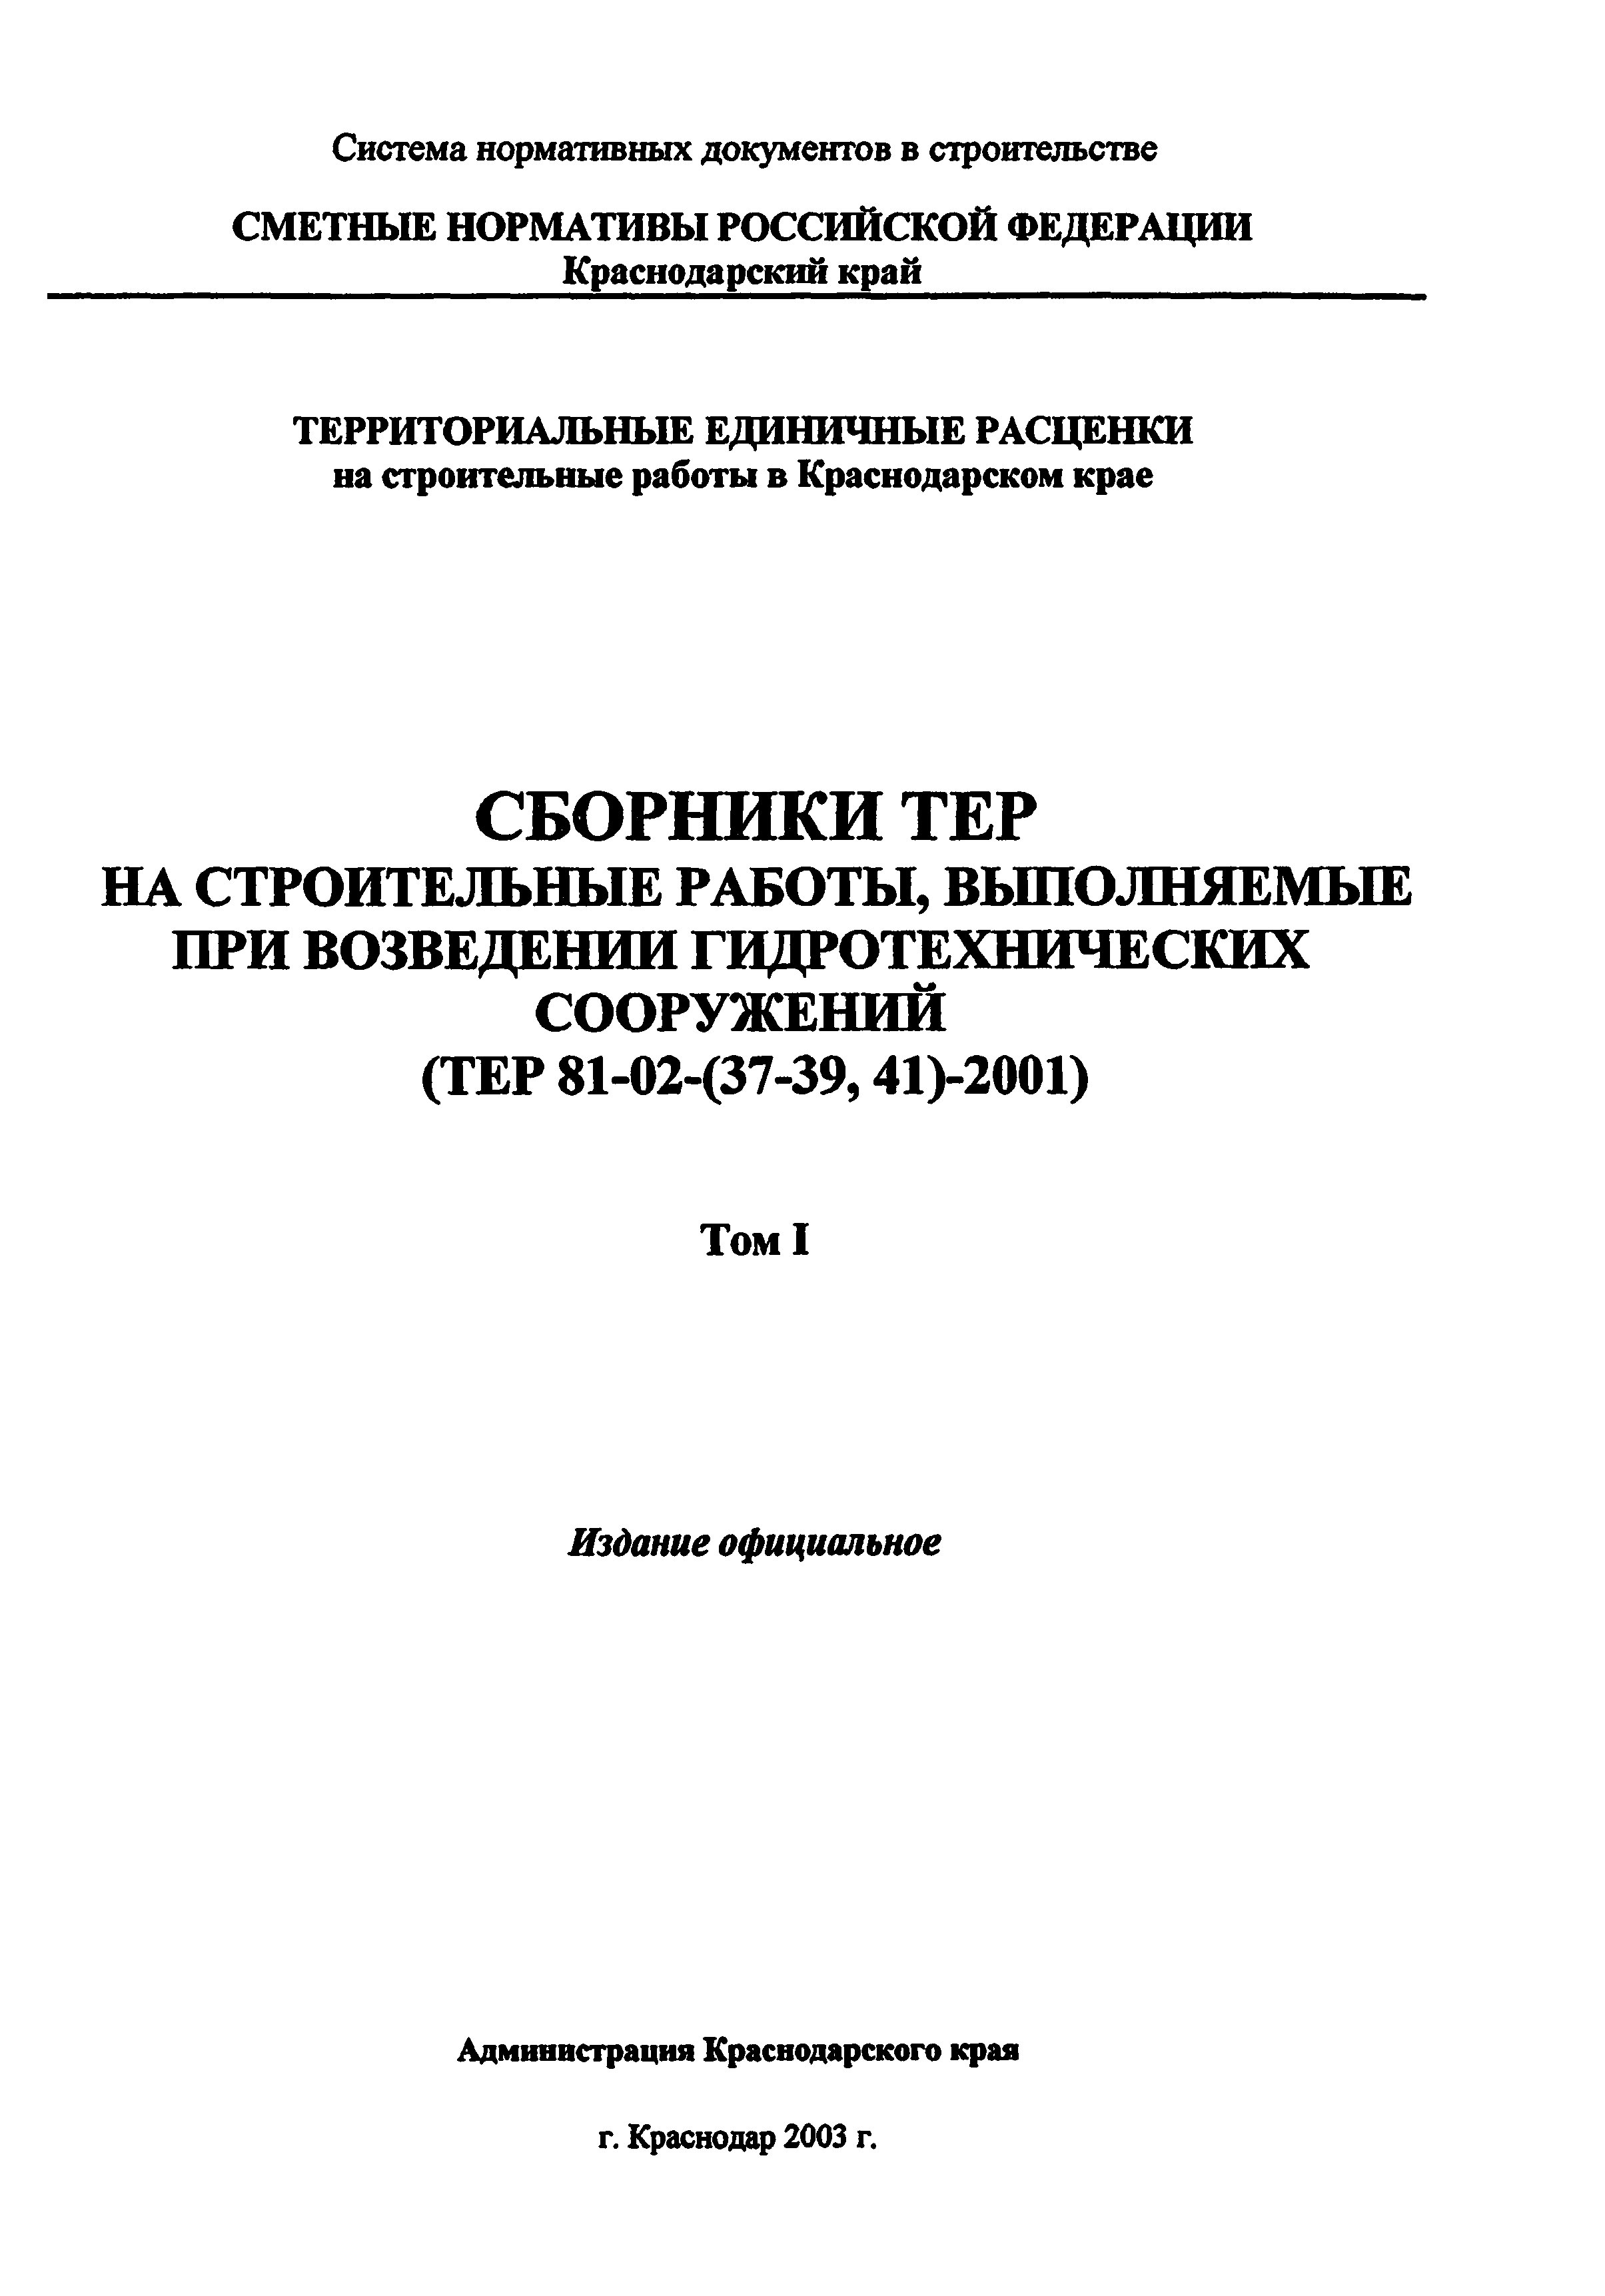 ТЕР Краснодарский край 2001-41